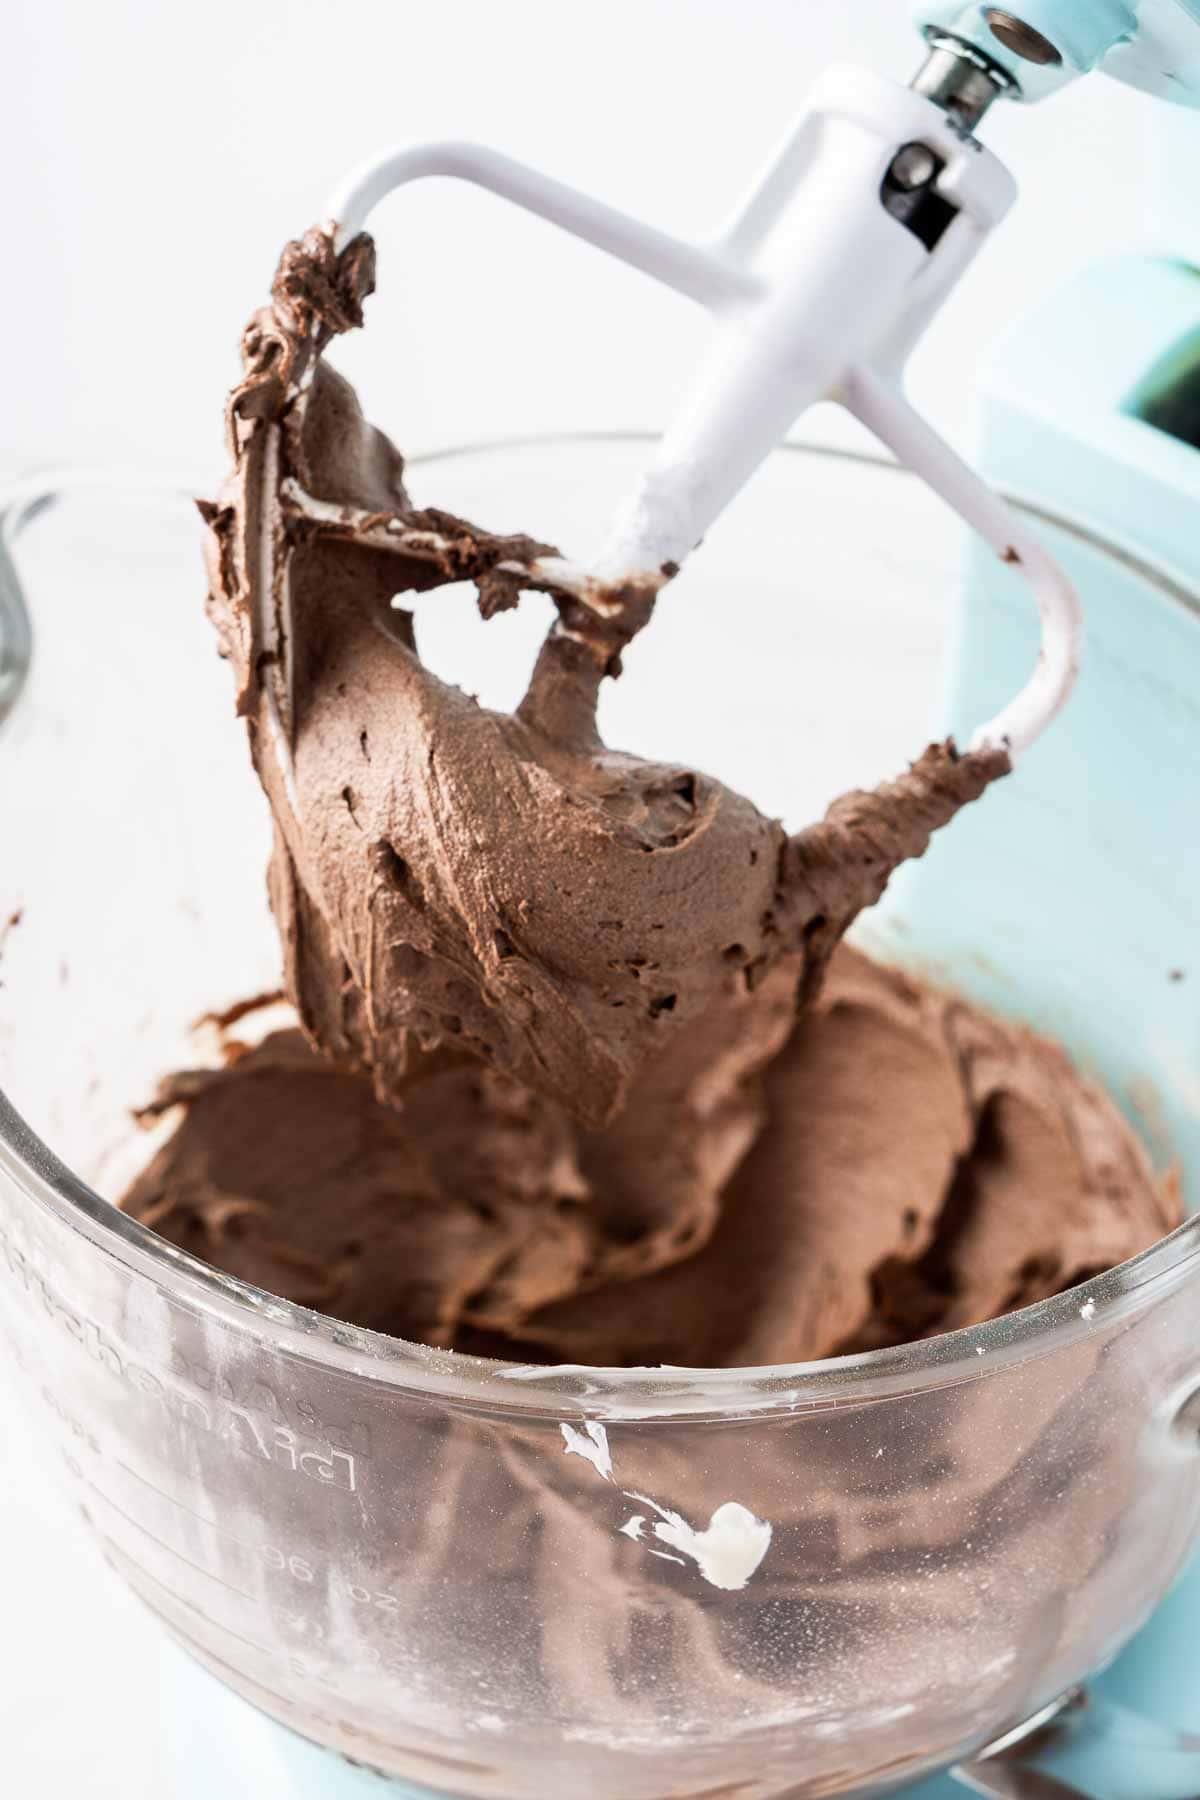 Creamy vegan chocolate buttercream in a stand mixer.